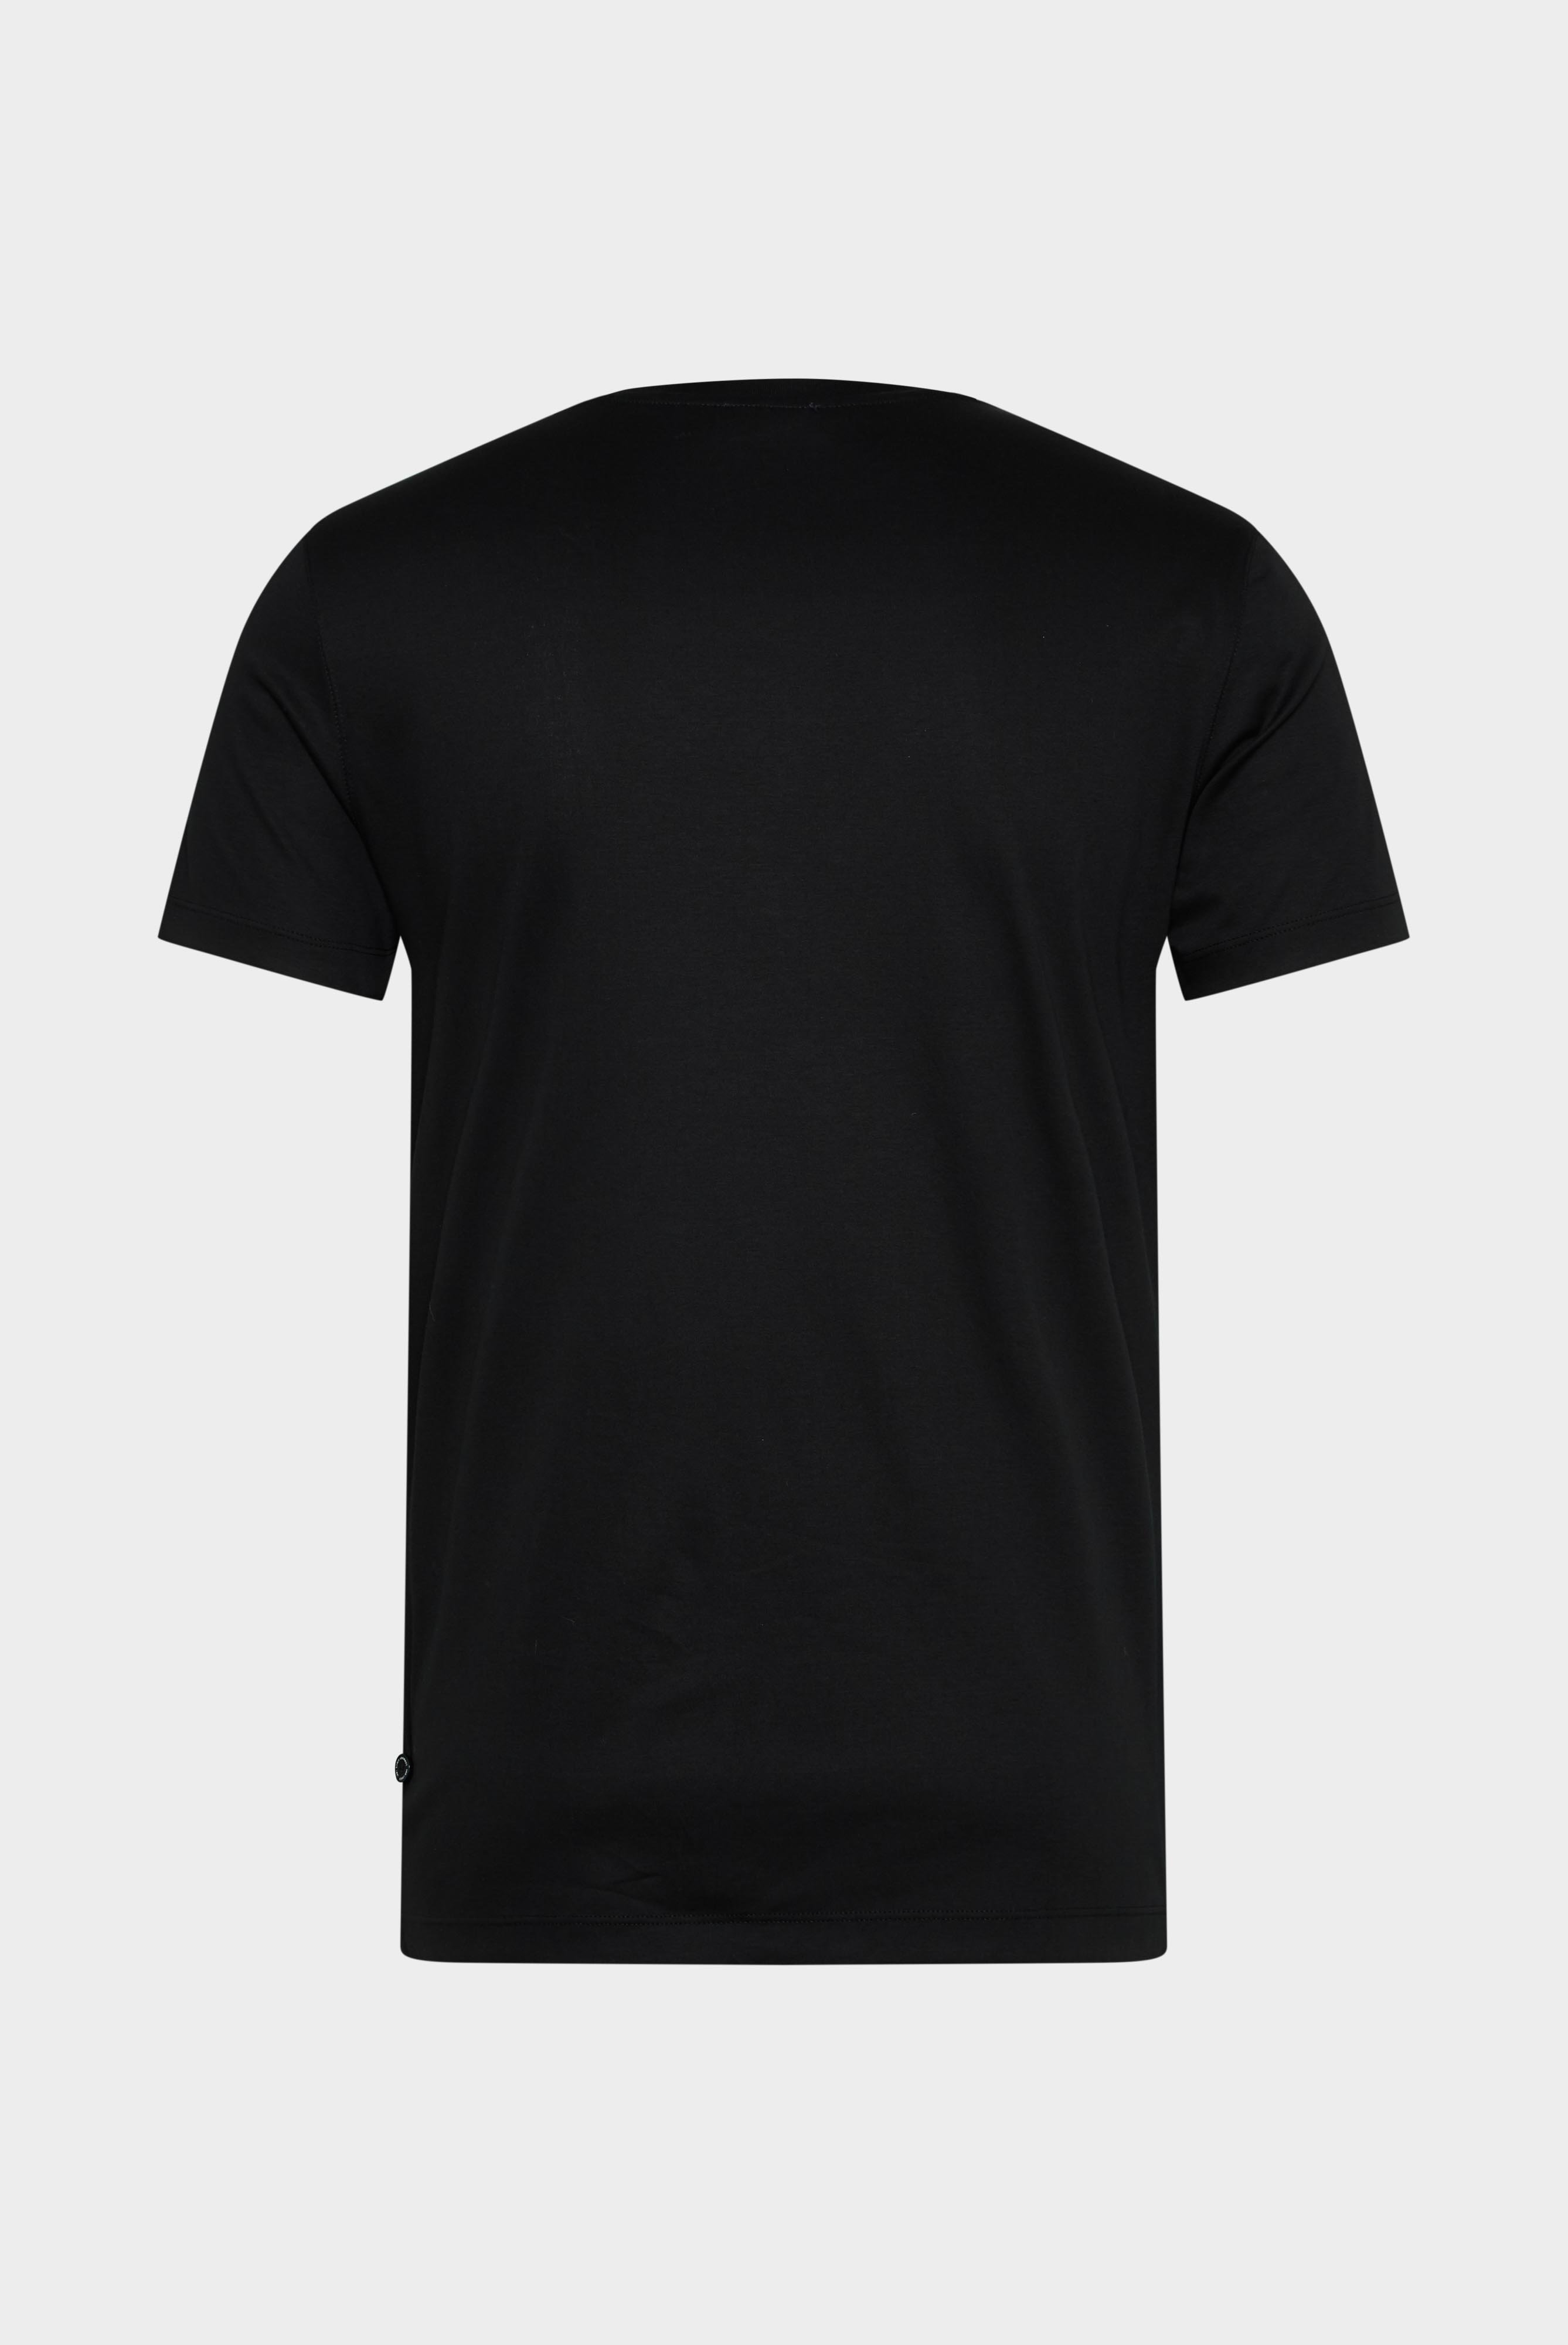 T-Shirts+Swiss Cotton Jersey V-Neck T-Shirt+20.1715.UX.180031.099.L